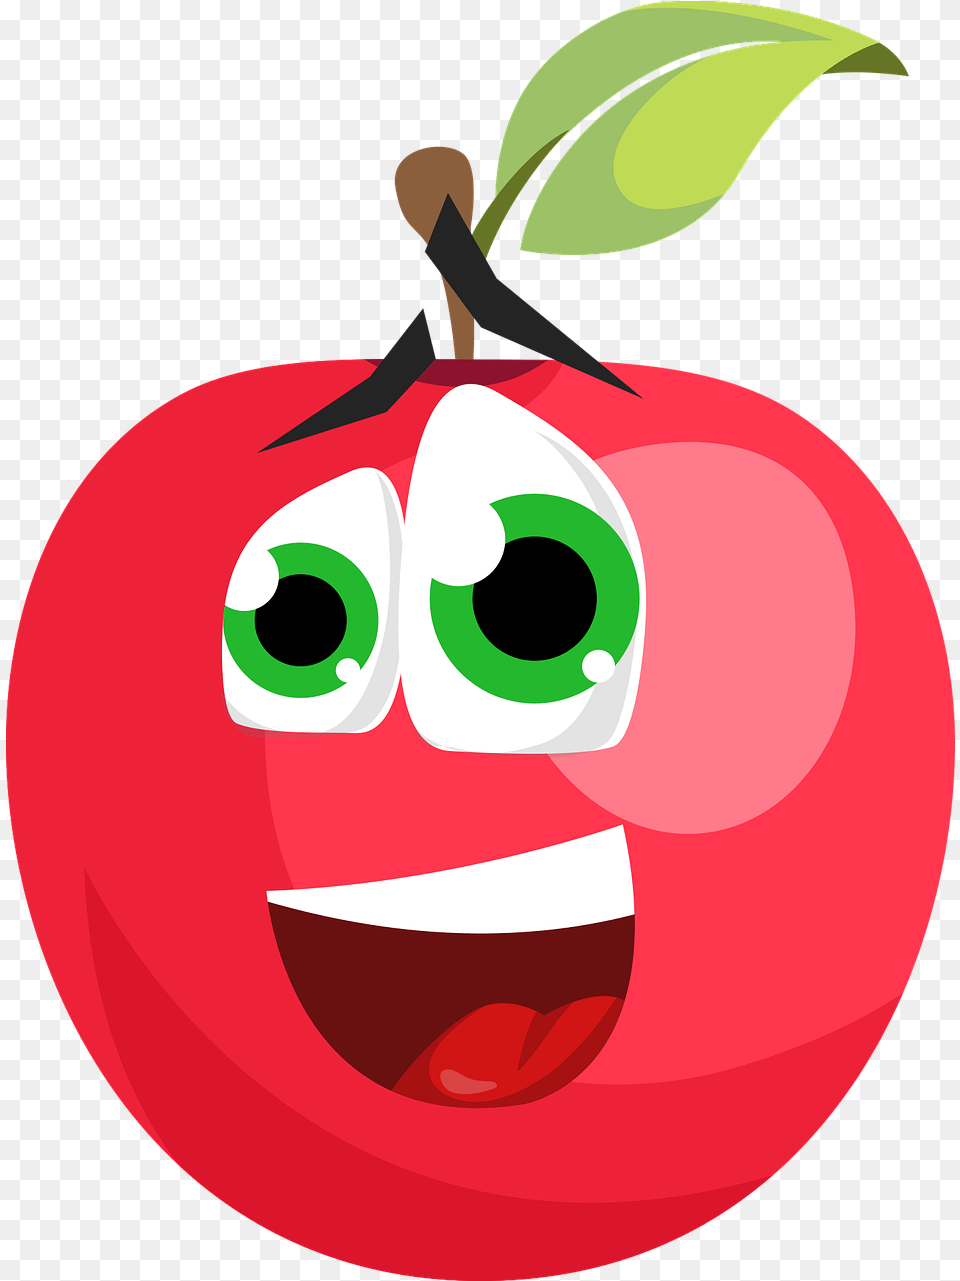 Apple Fruit Cartoon Desenhos De Frutas Animadas, Food, Plant, Produce Free Png